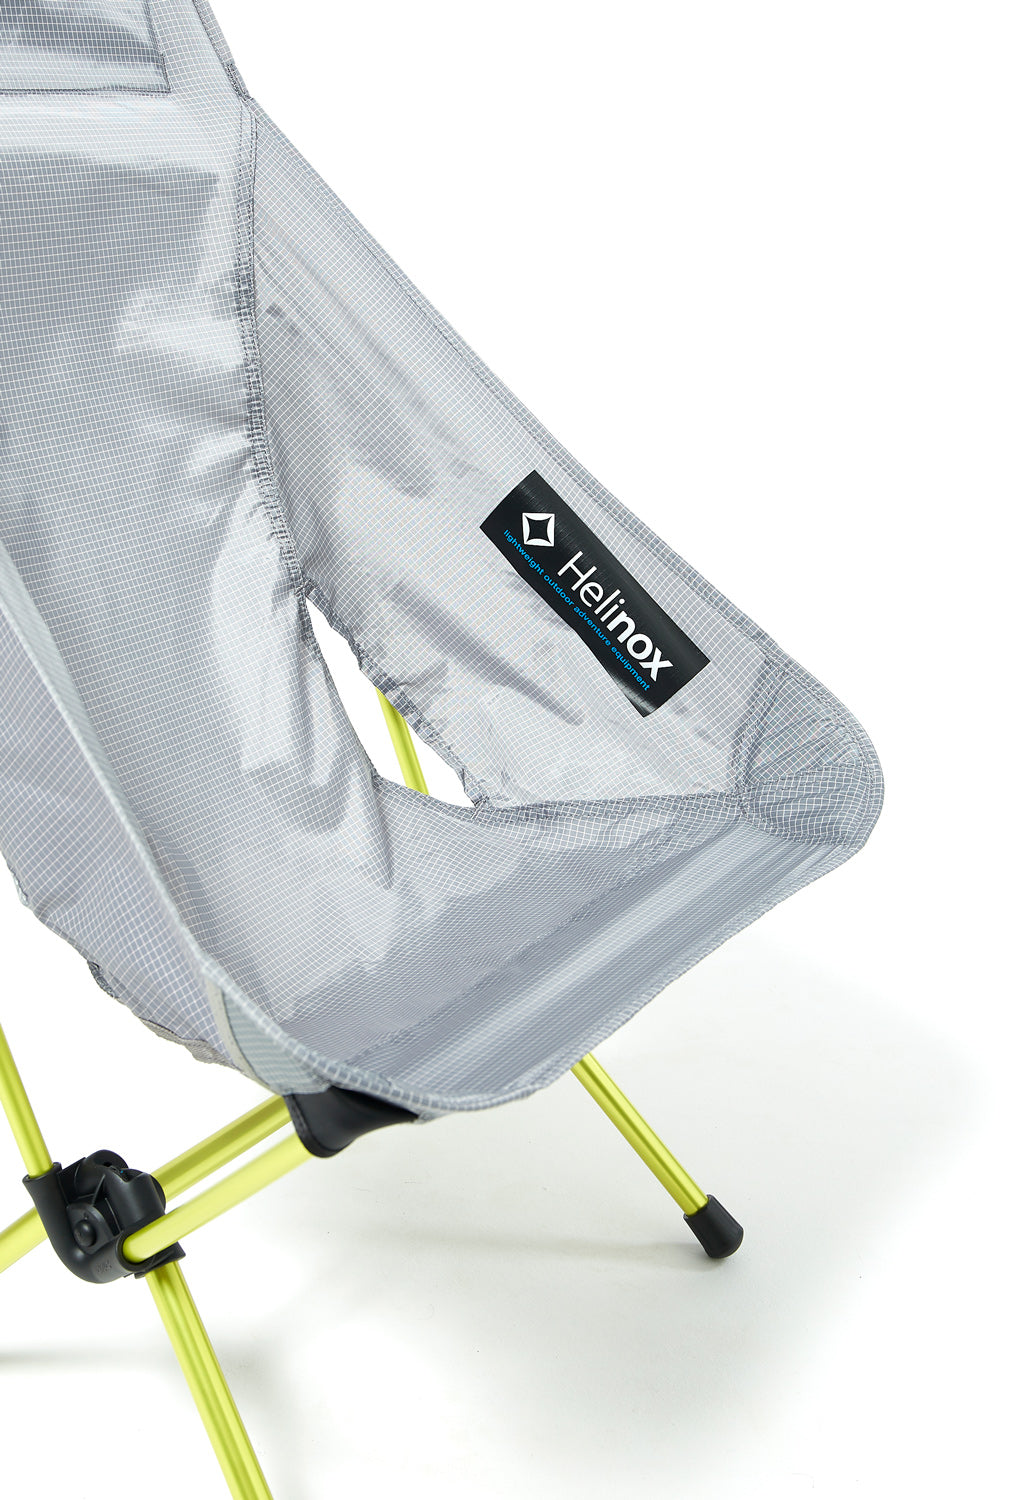 Helinox Chair Zero High Back - Grey